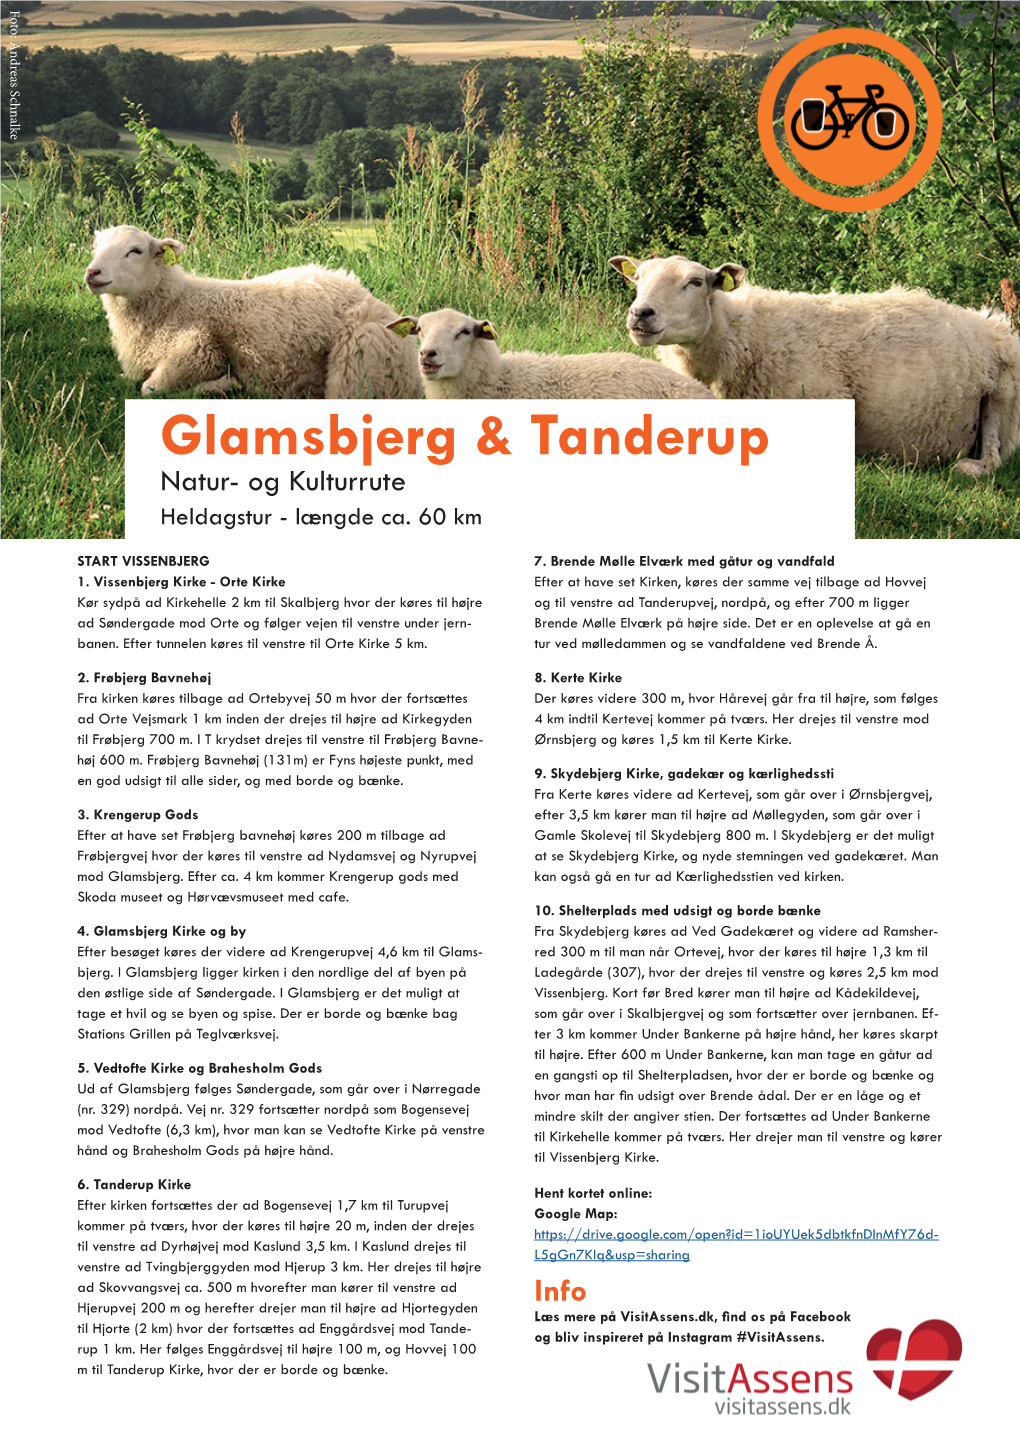 Glamsbjerg & Tanderup